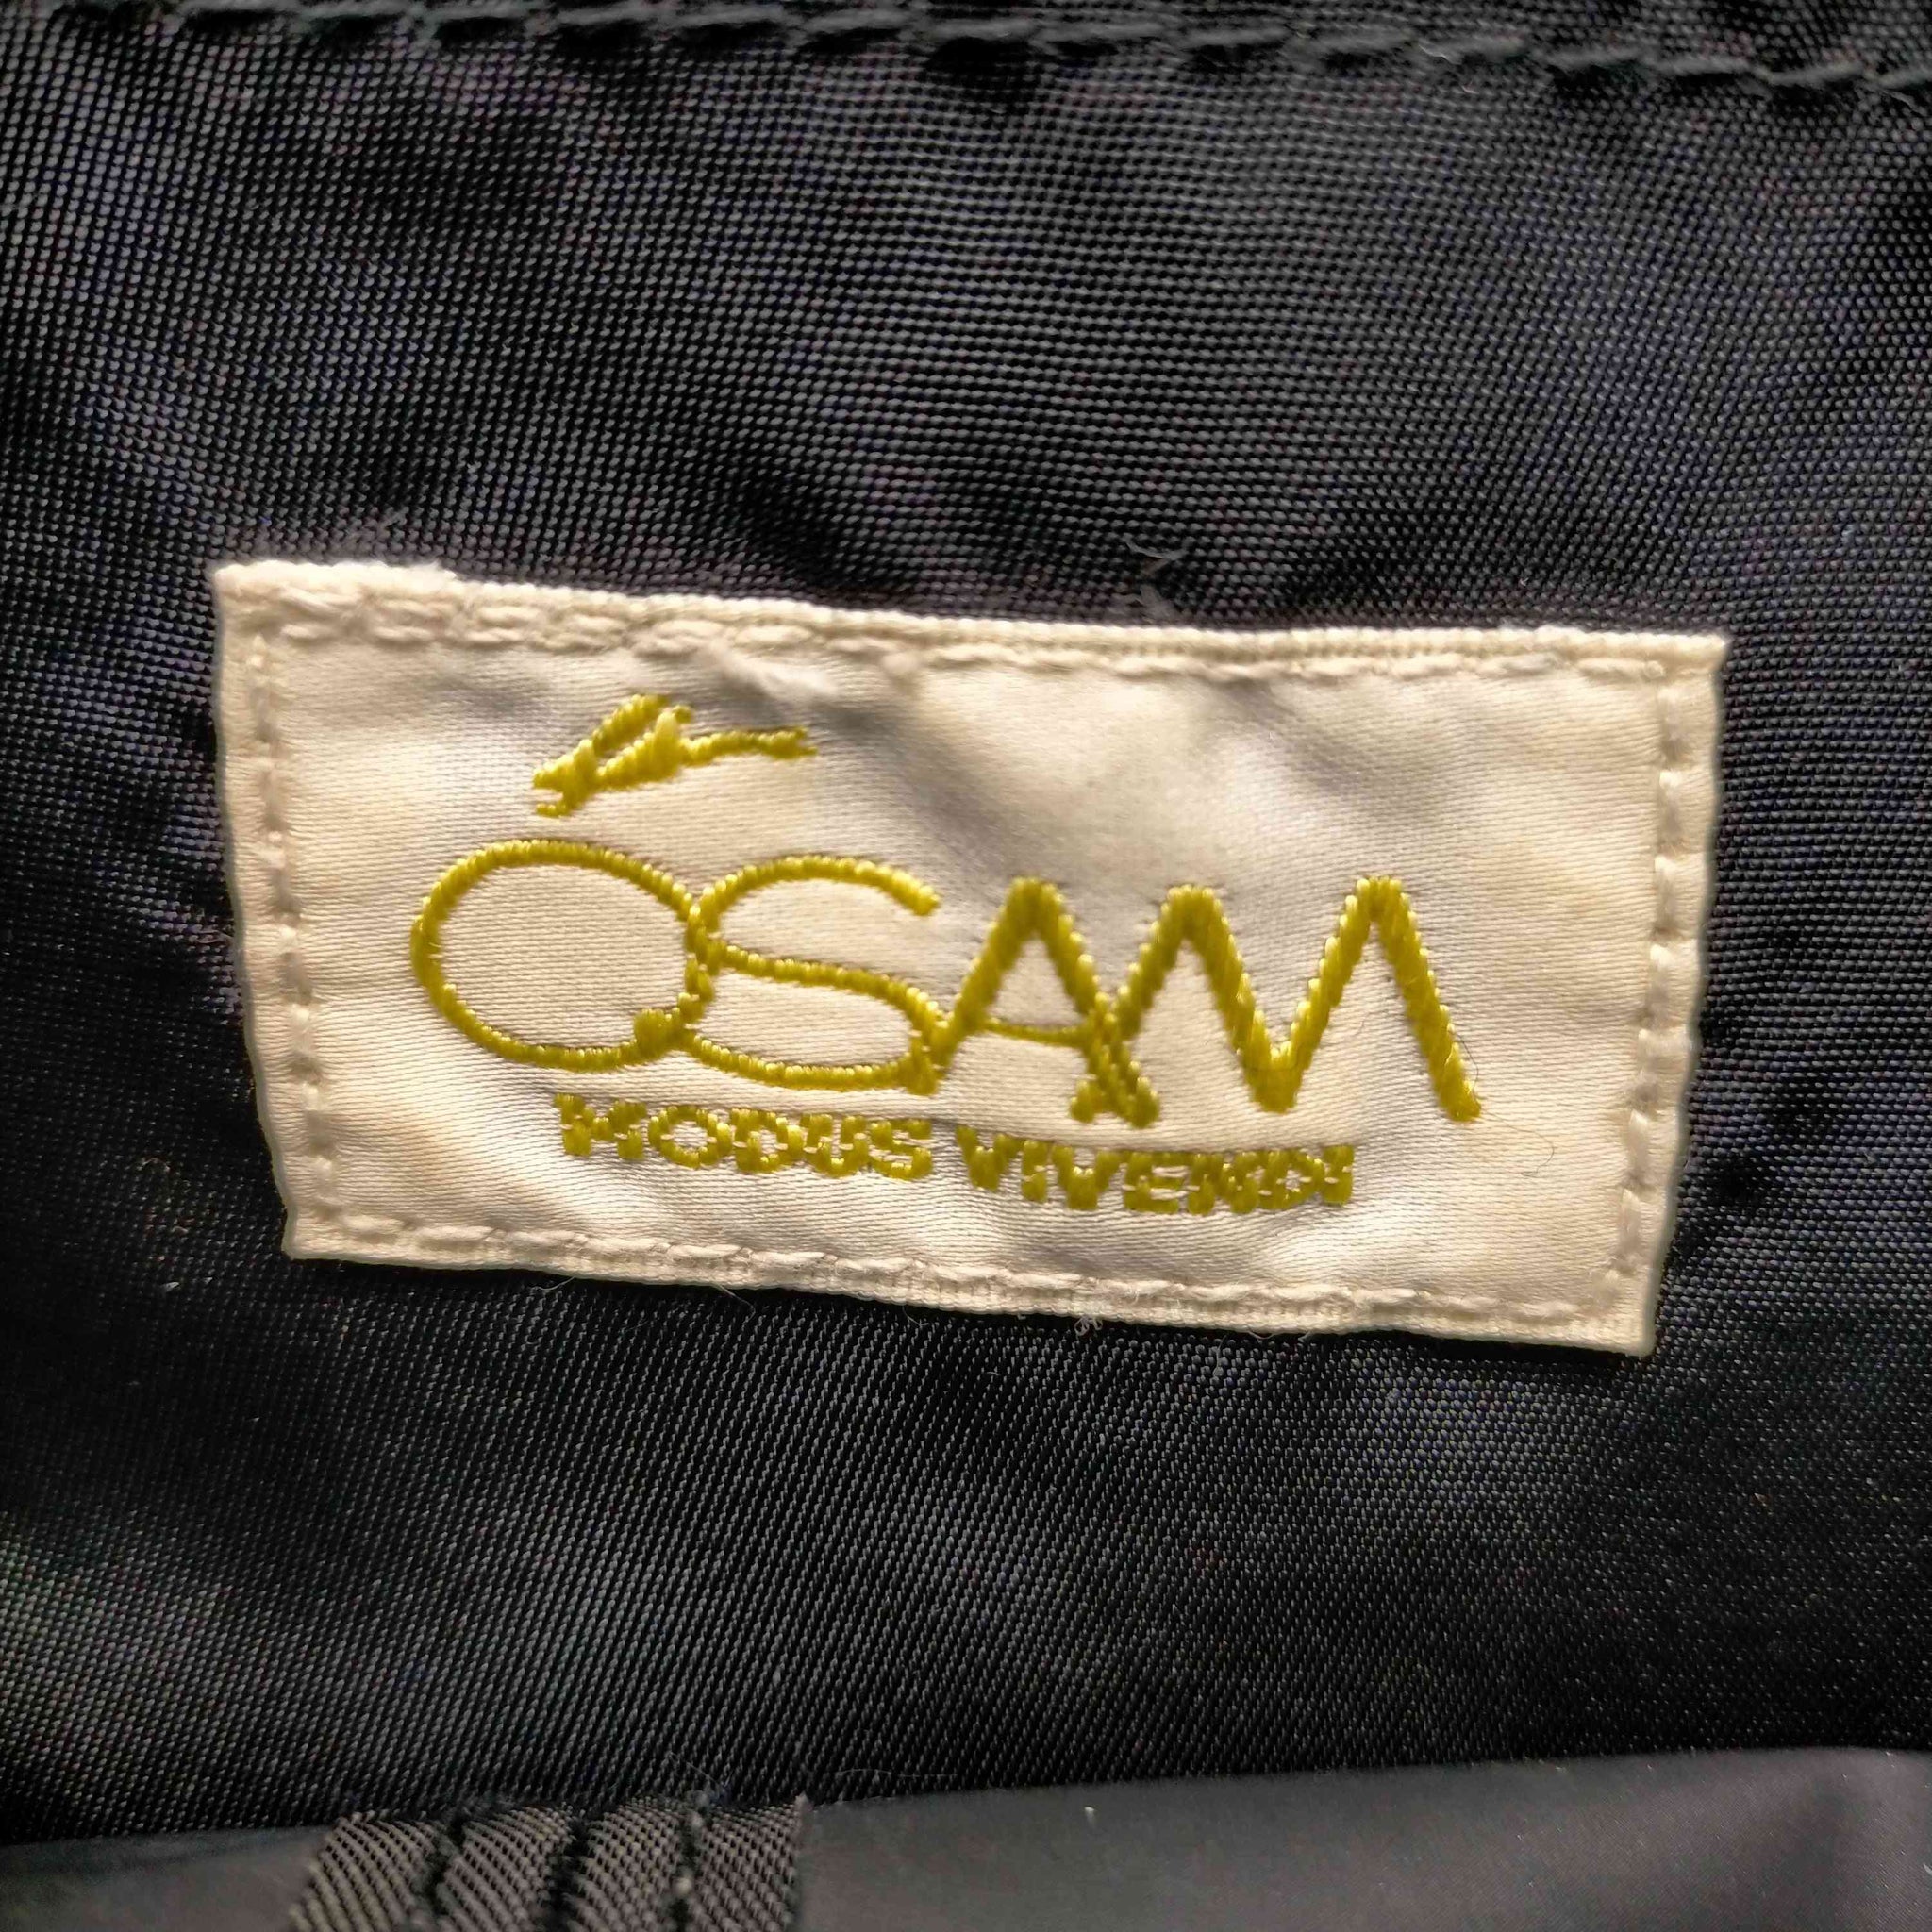 OSAM(オサム)モノグラムハンドバッグ